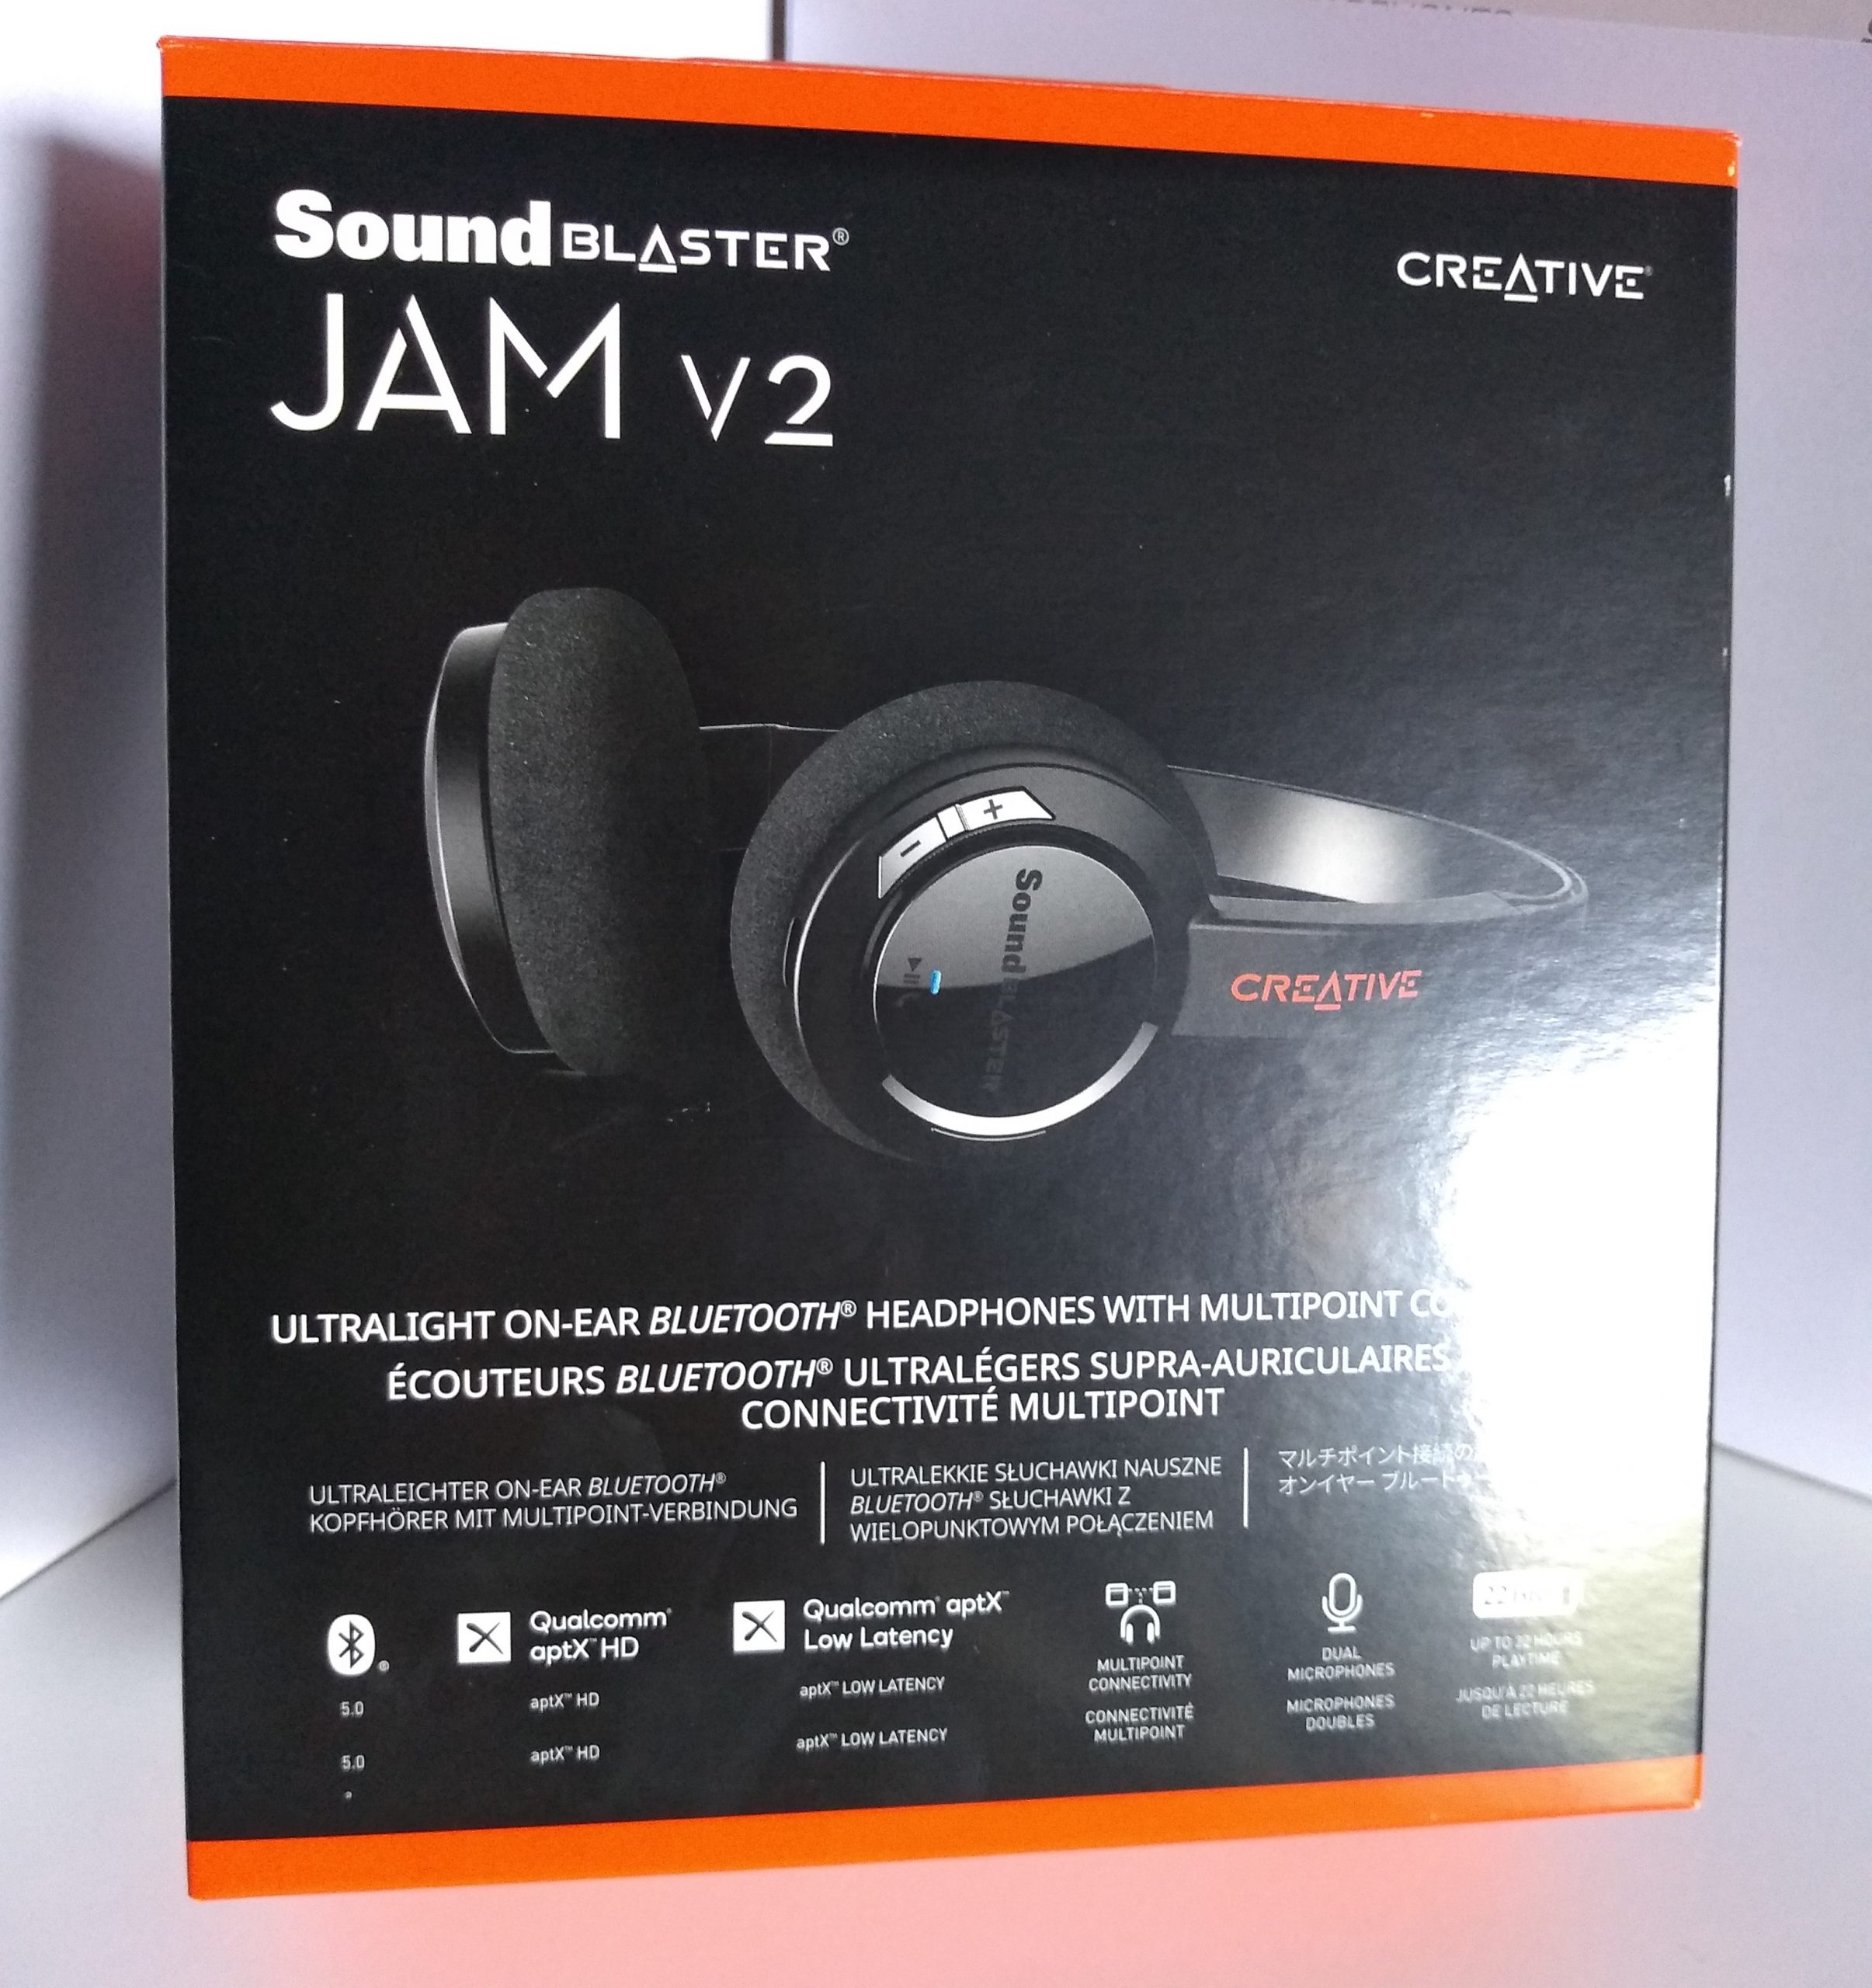 Creative Sound Blaster Jam v2. Creative jam v2